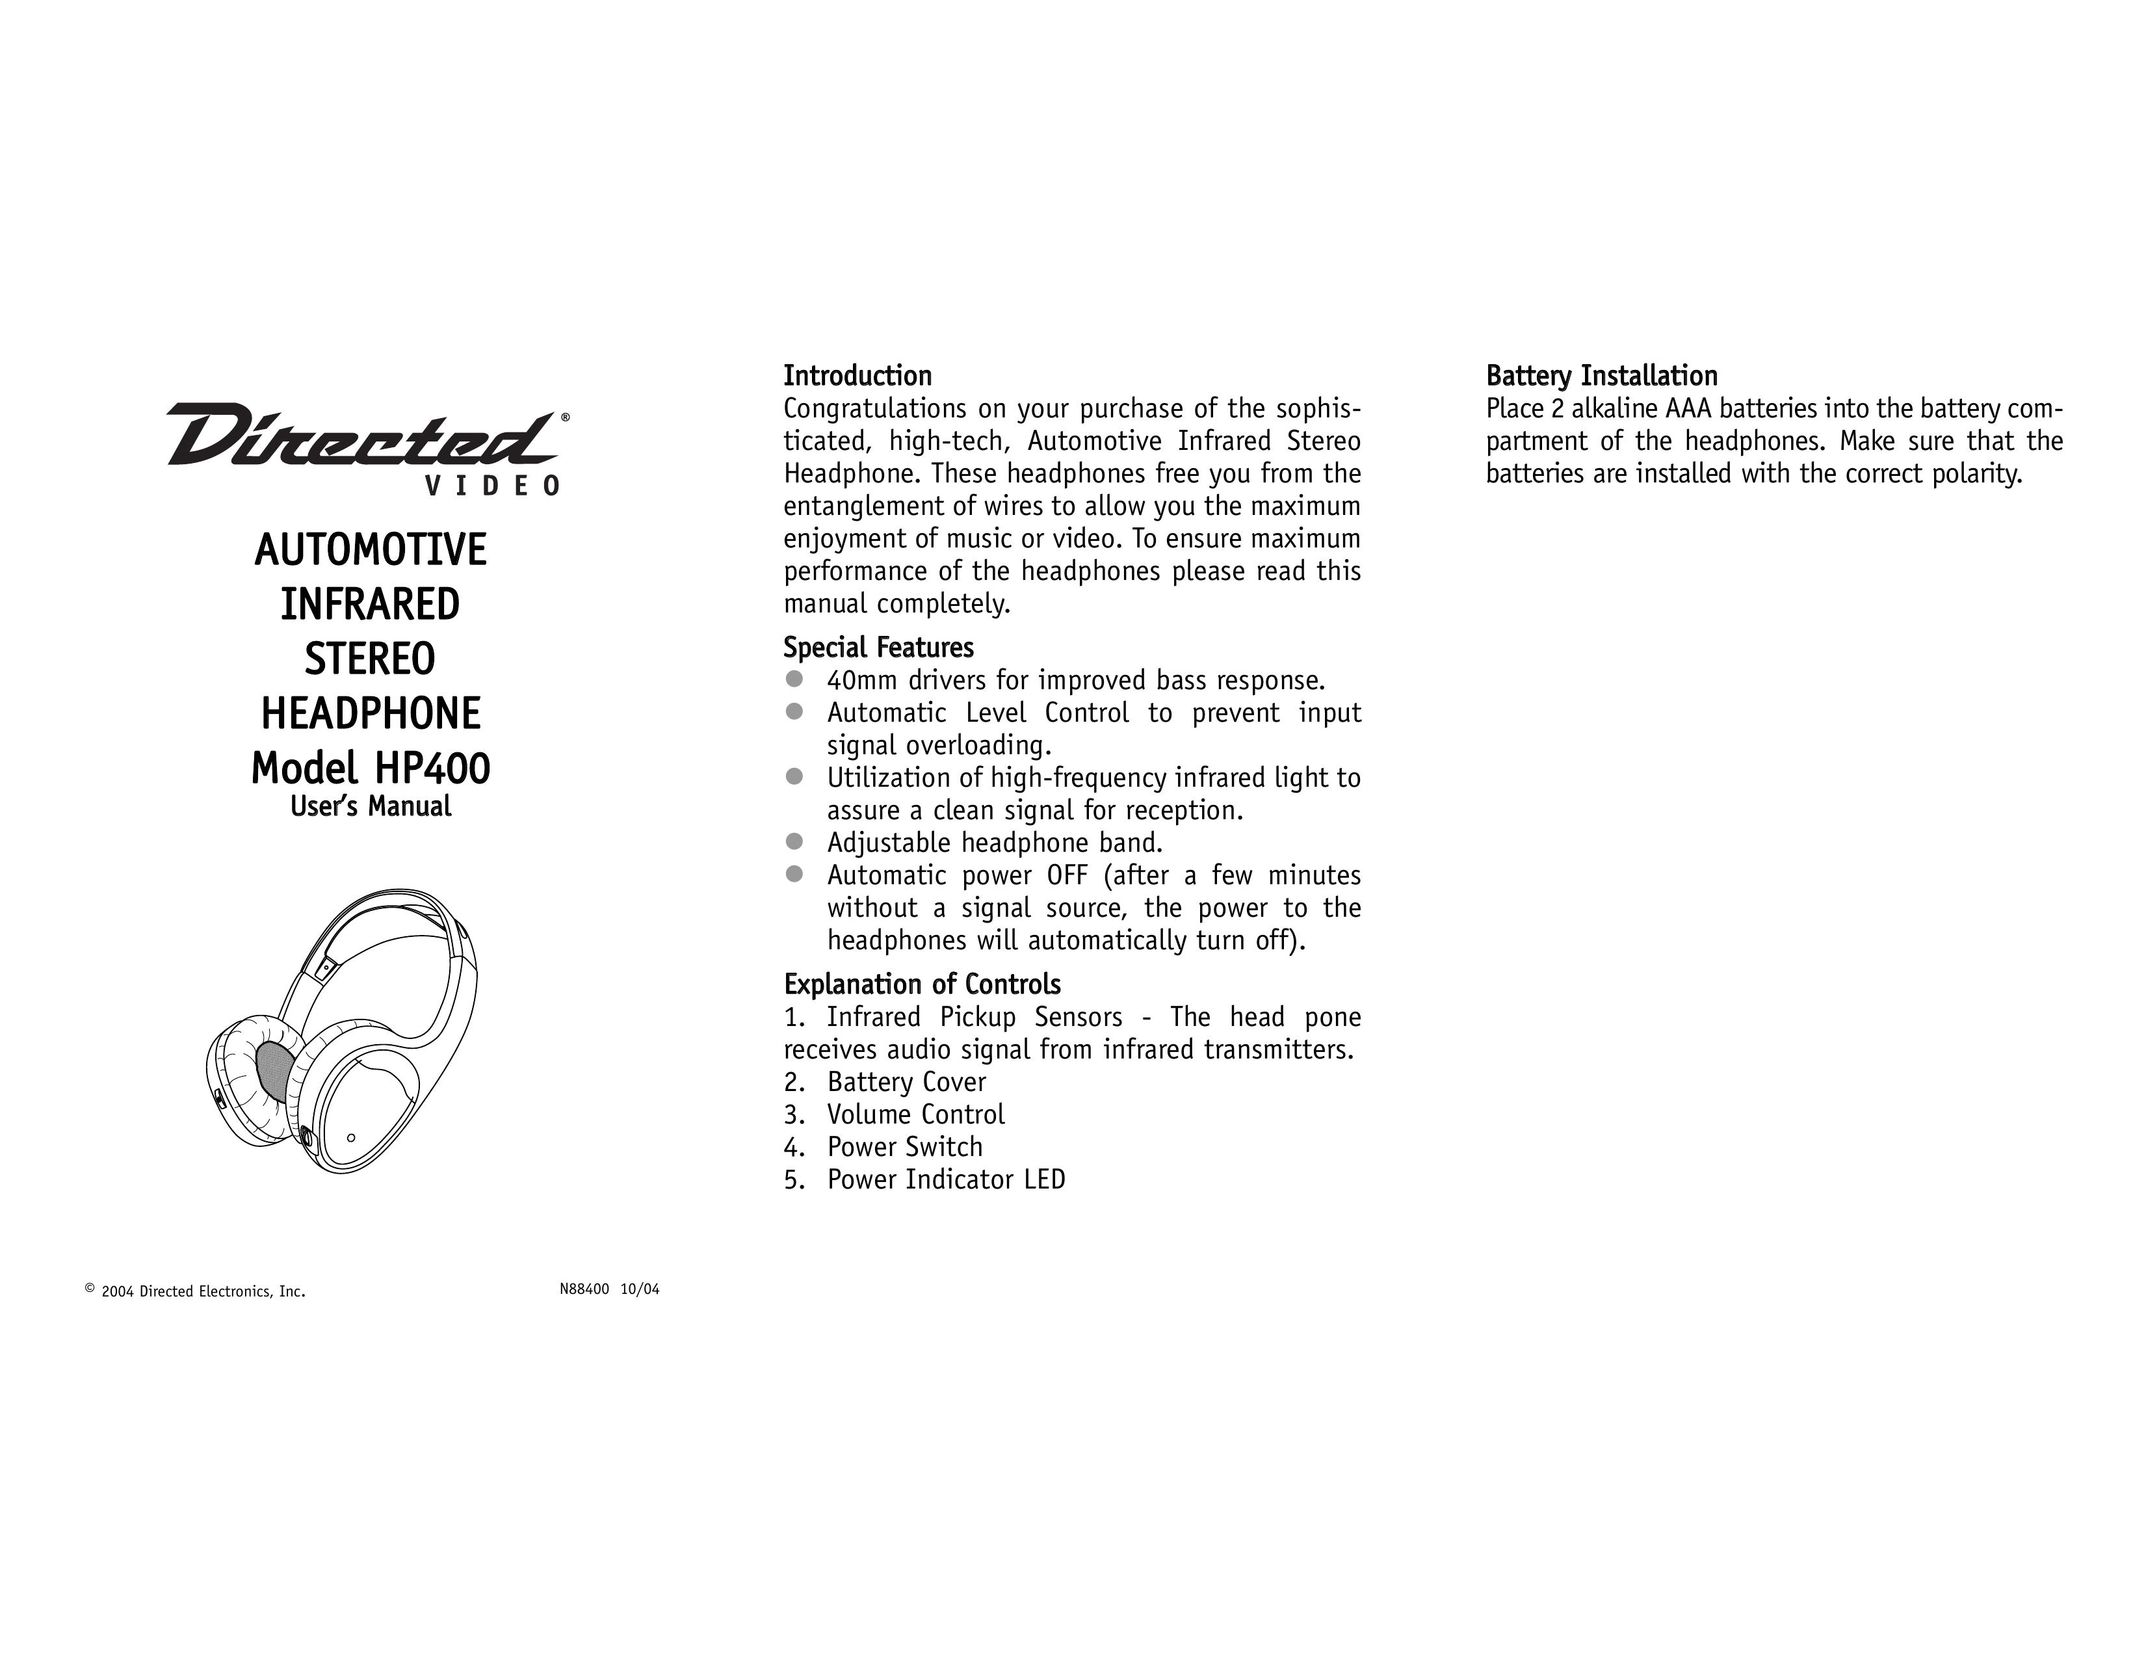 Directed Electronics HP400 Headphones User Manual